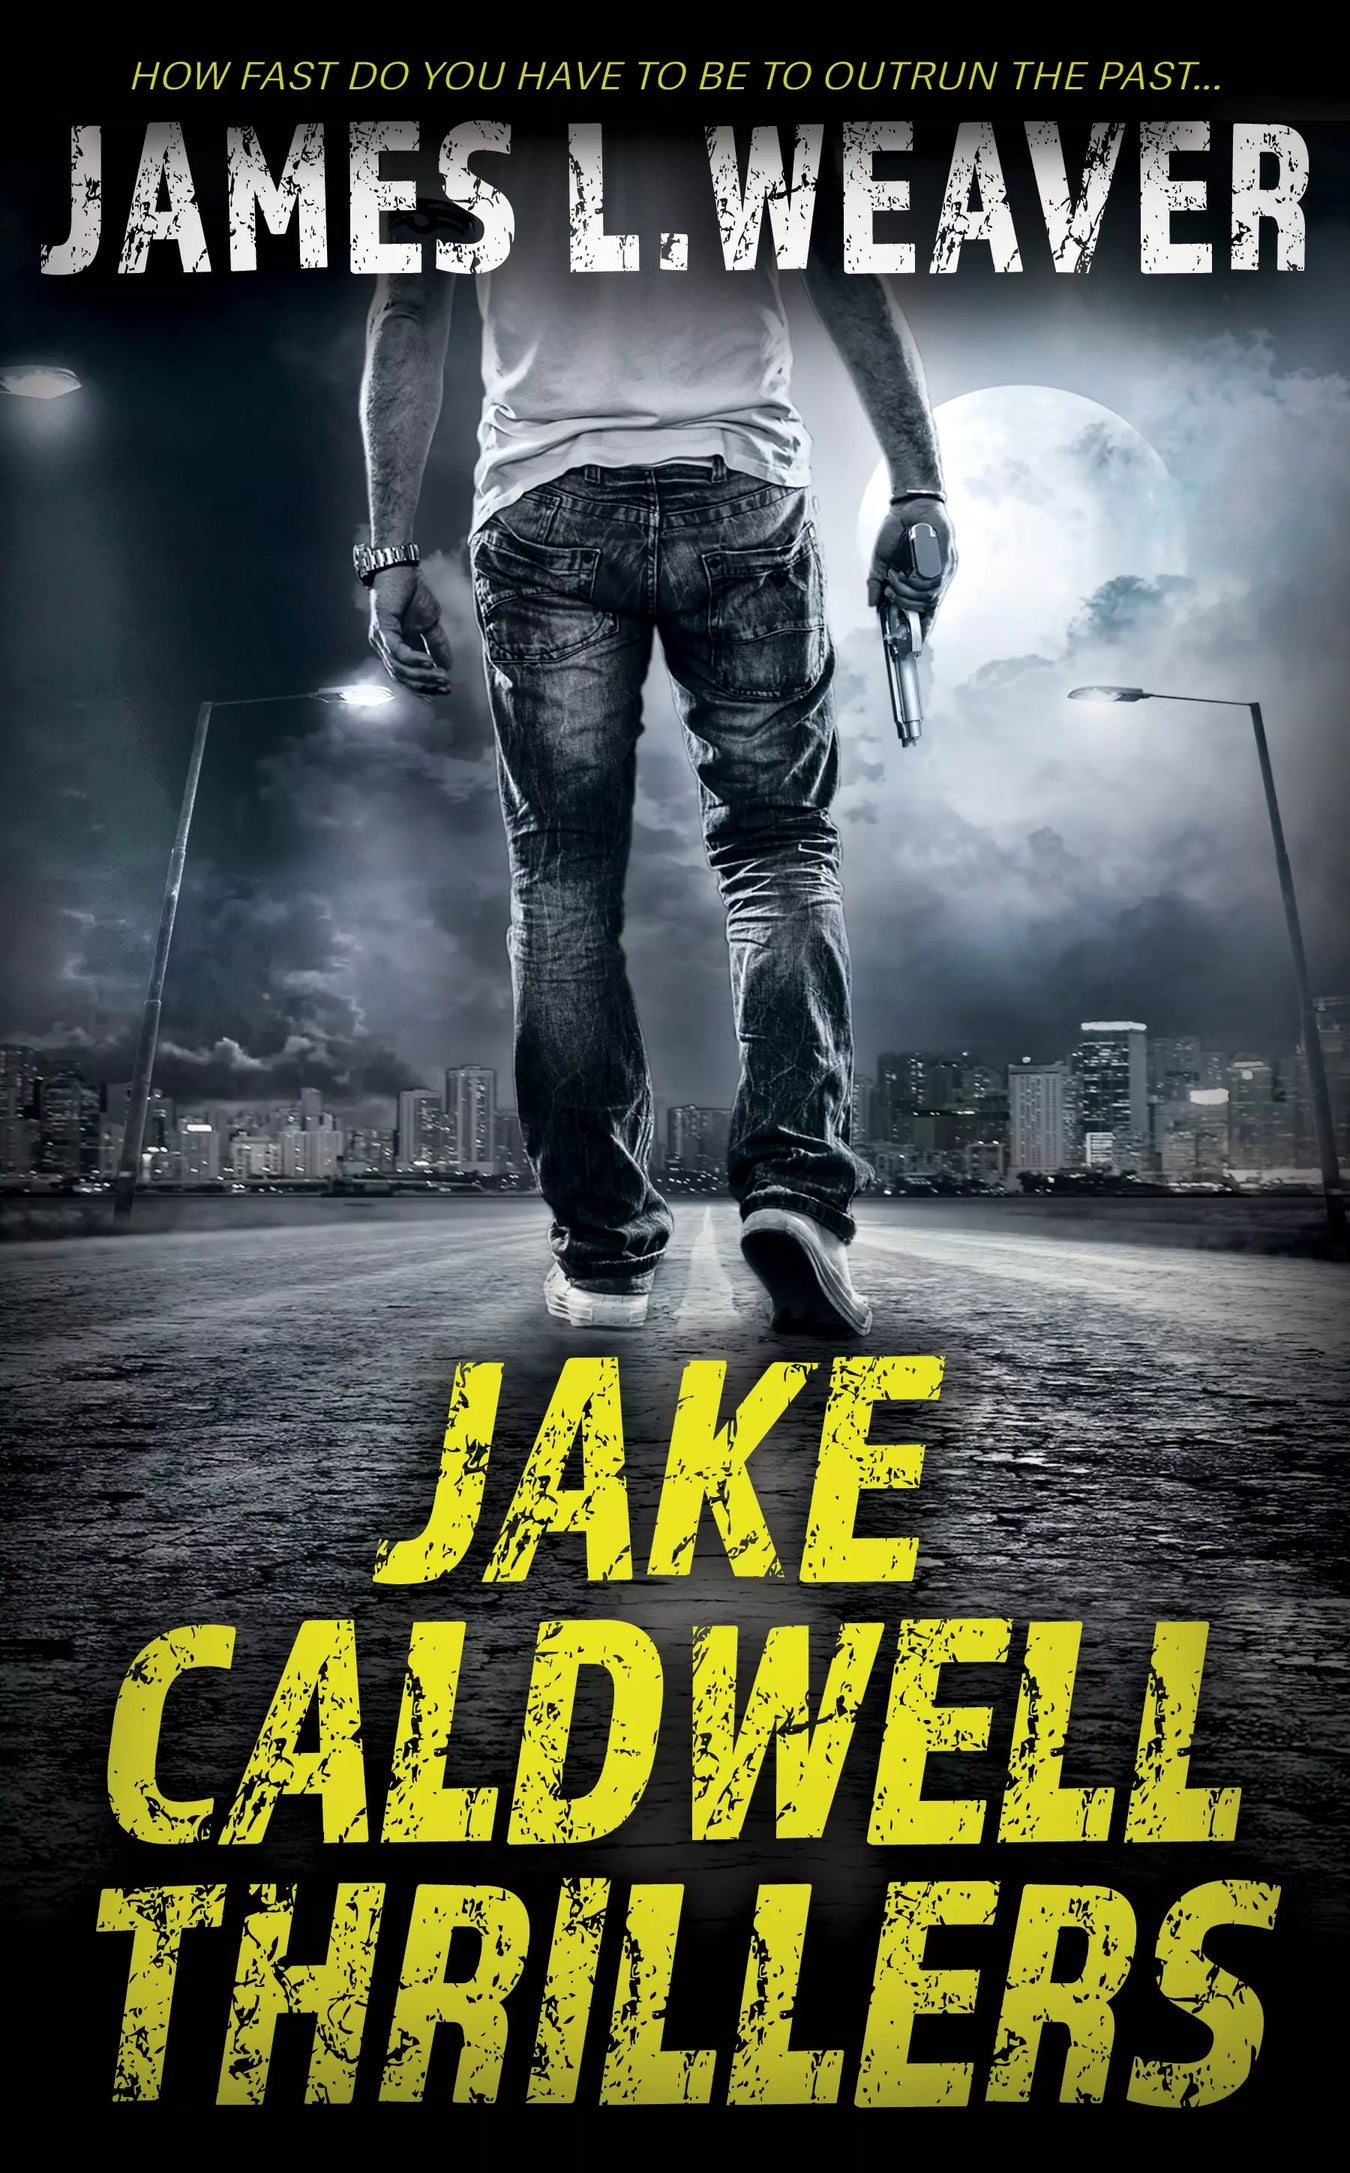 Jake Caldwell